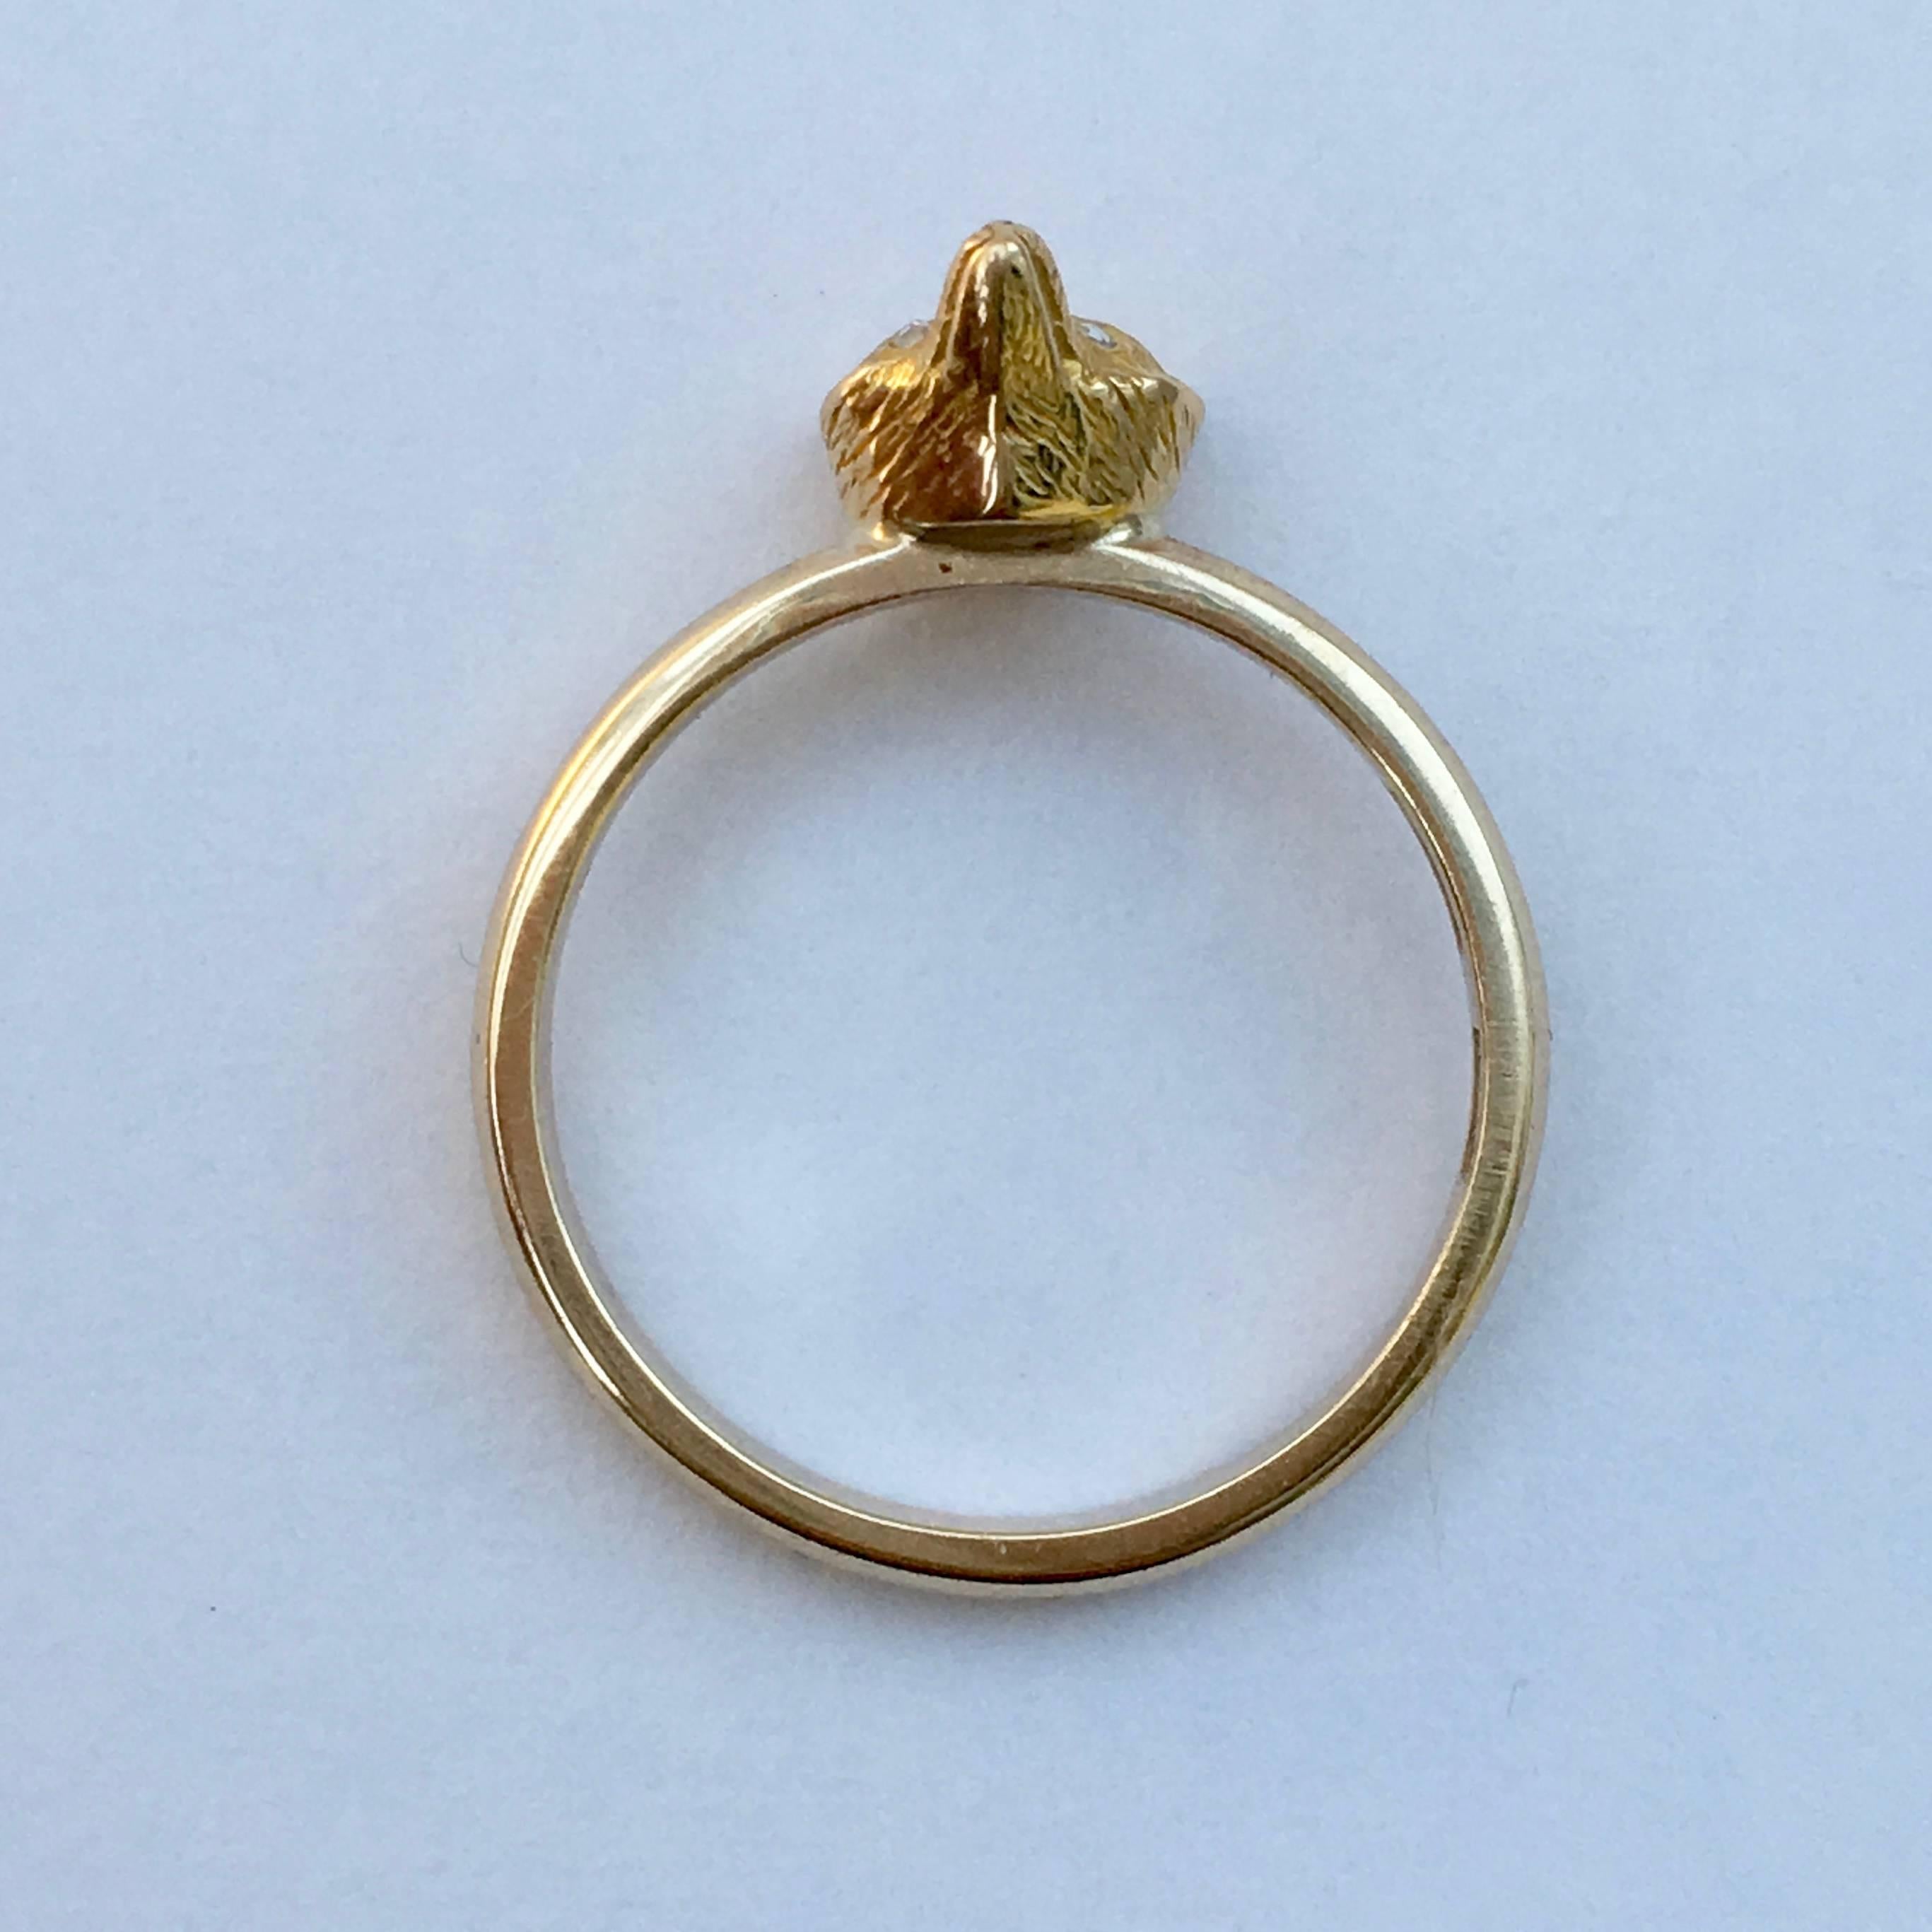 Diamond Rings Gold Edwardian Fox Ring Rose Cut Diamond Eyes Vintage Jewelry 1